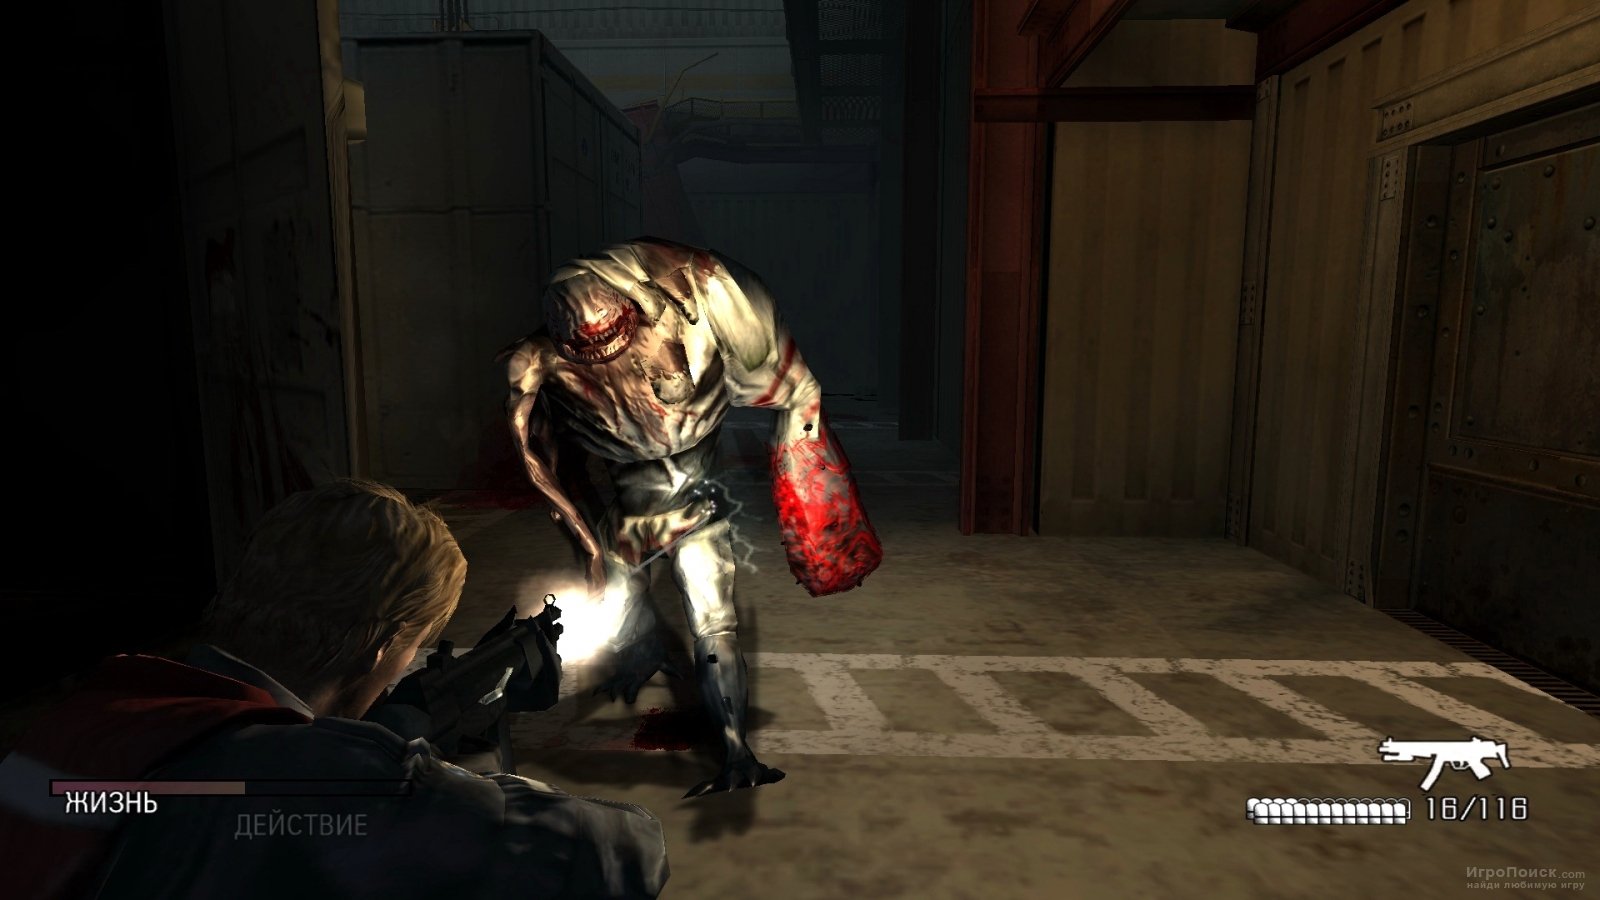 Скриншот 2 к игре Cold Fear v.1.0 [L] (2005) PC | Лицензия